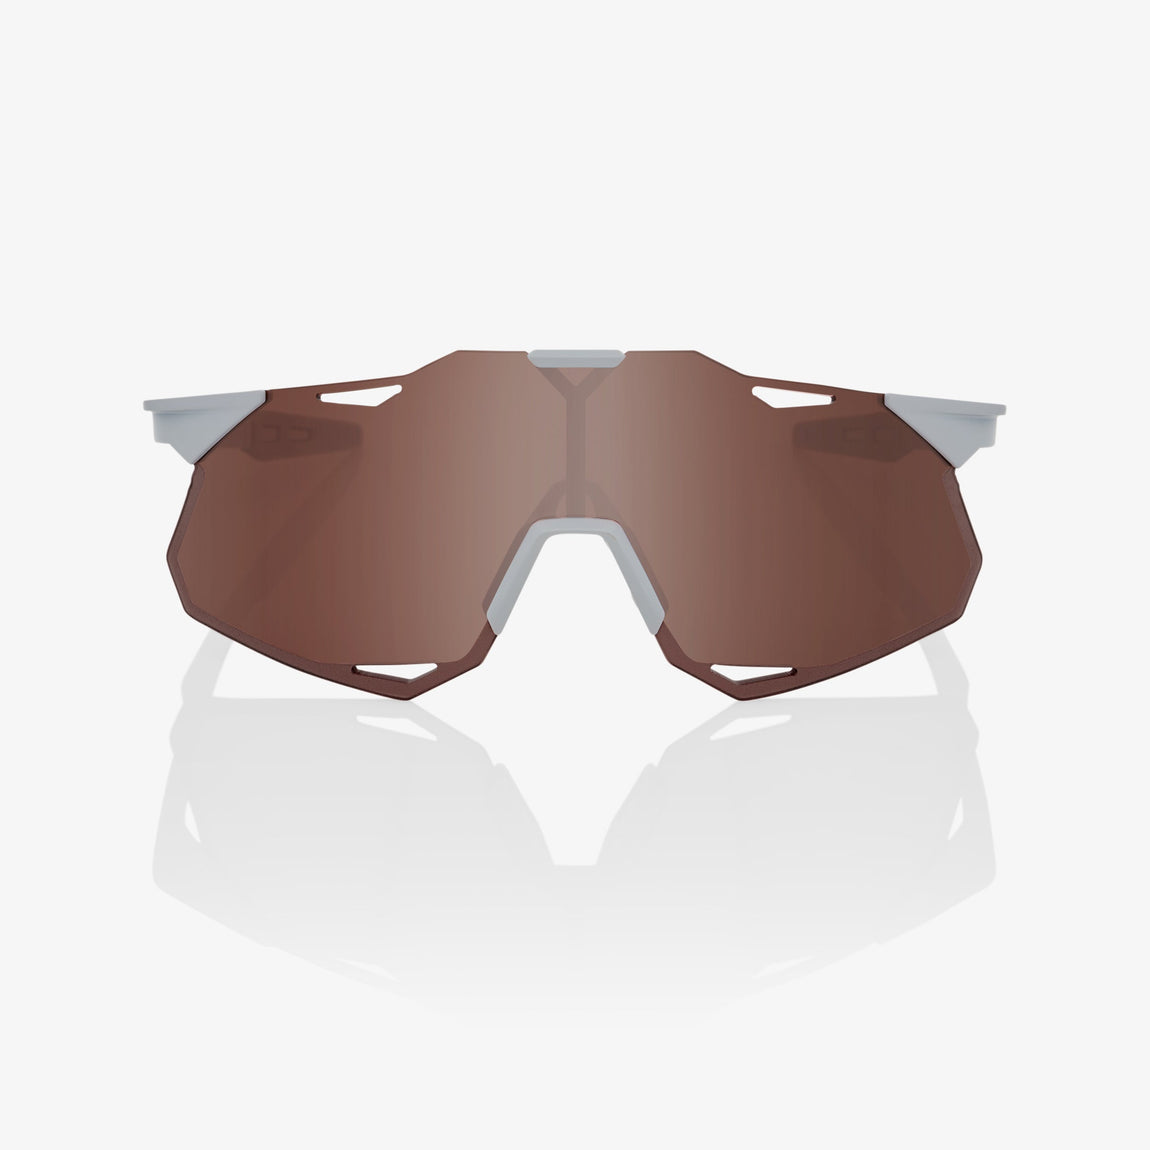 100% Hypercraft XS Sunglasses, Matte Stone Grey frame - HiPER Crimson Silver Mirror Lens